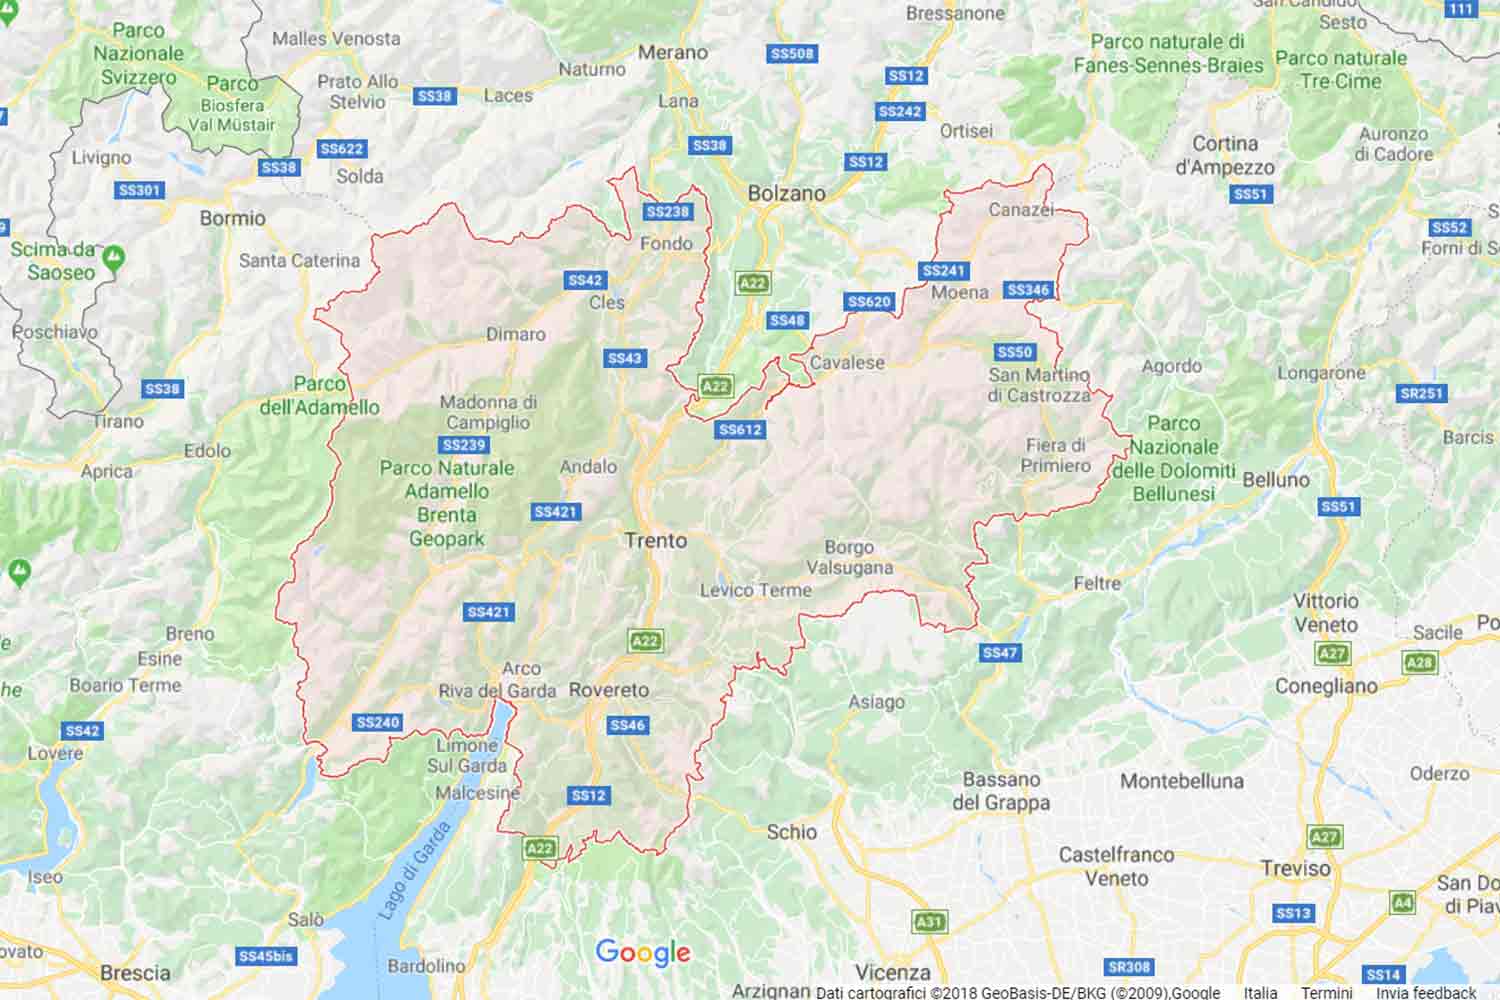 Trentino - Trento - Ronzo Chienis Preventivi Veloci google maps